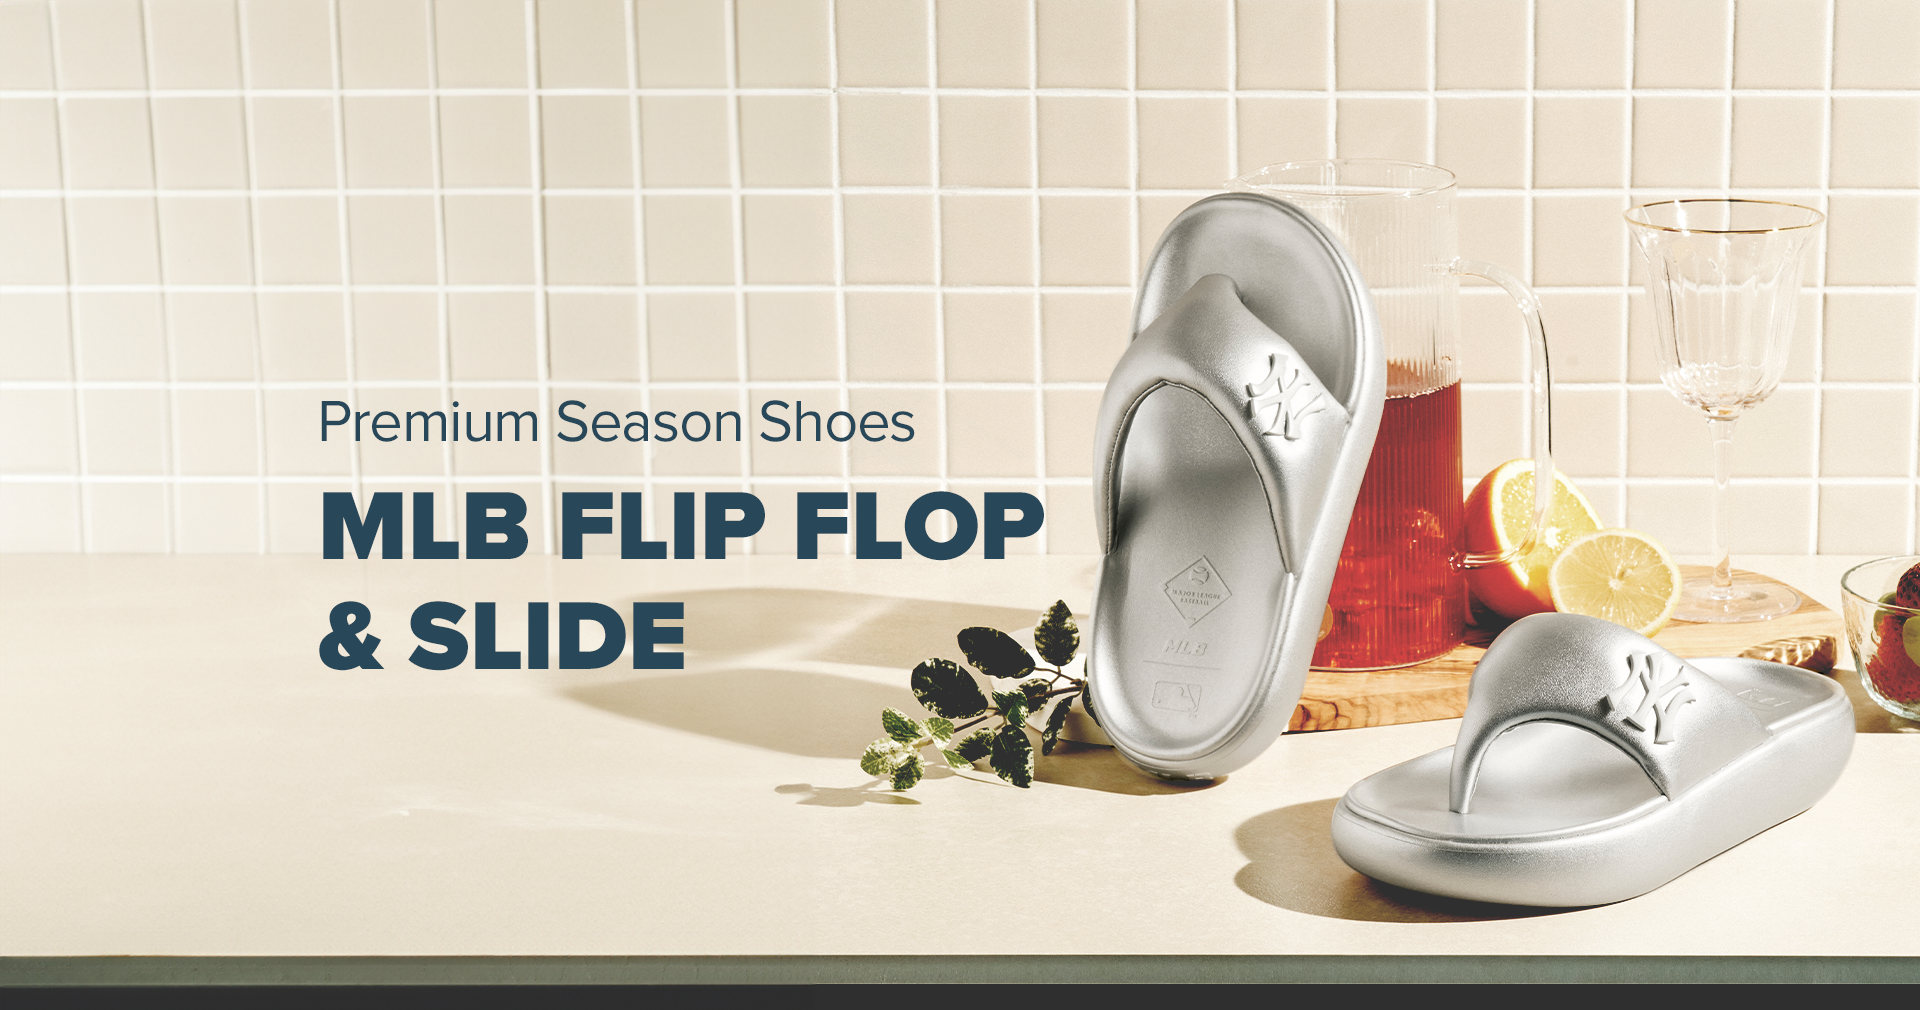 Premium Season Shoes MLB FLIP FLOP & SLIDE